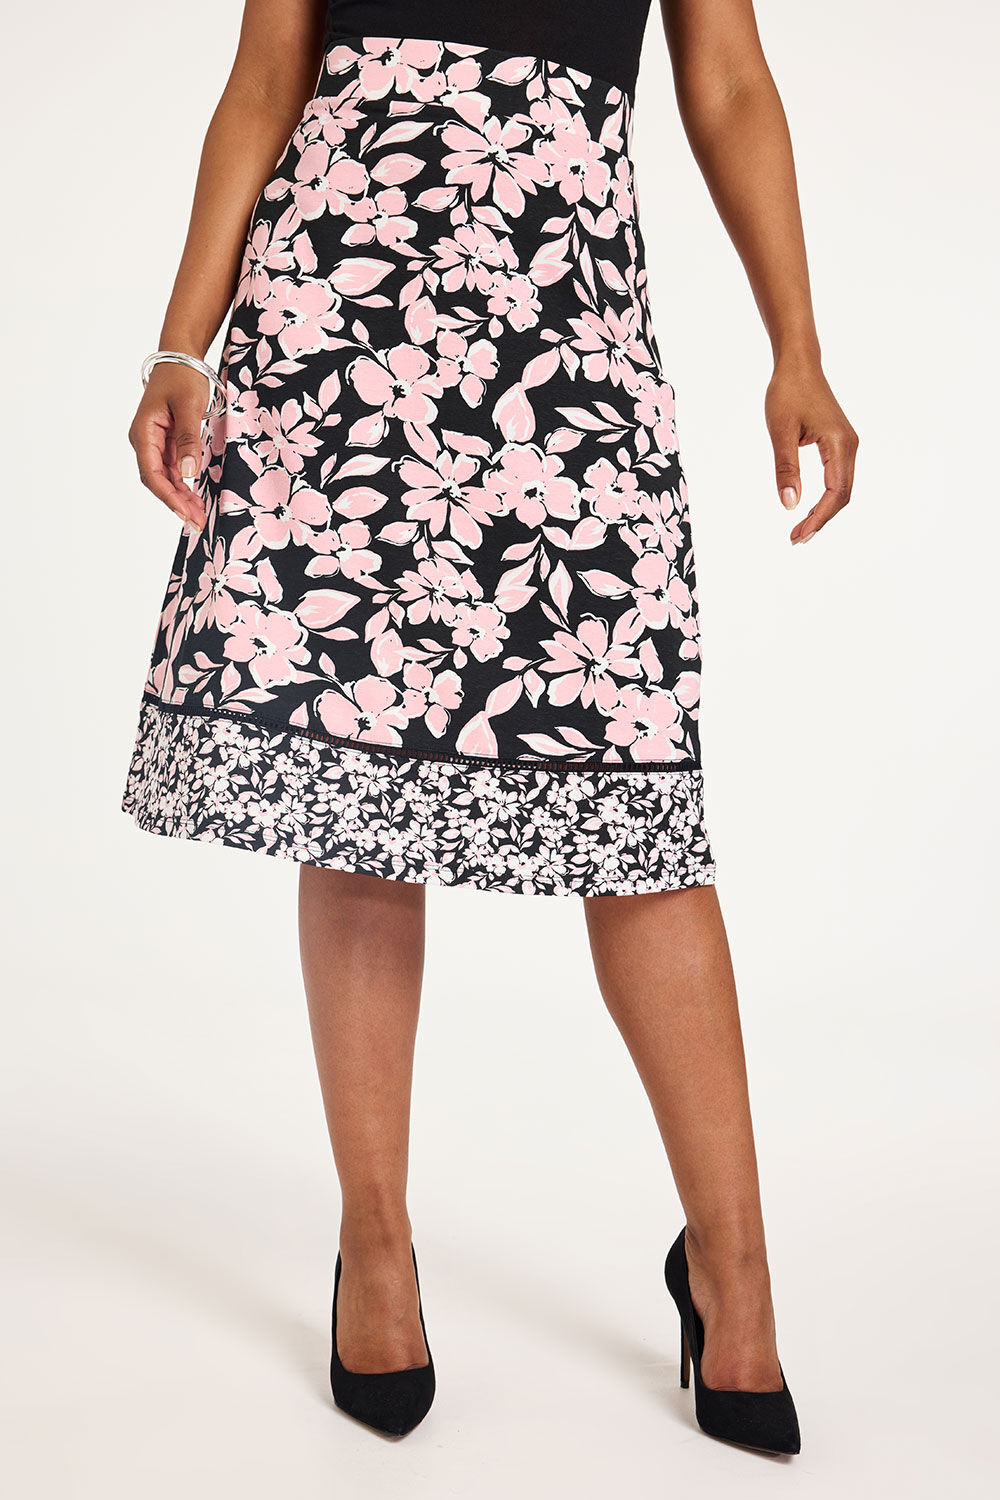 Bonmarche Black Floral Border Print A-Line Jersey Skirt, Size: 12